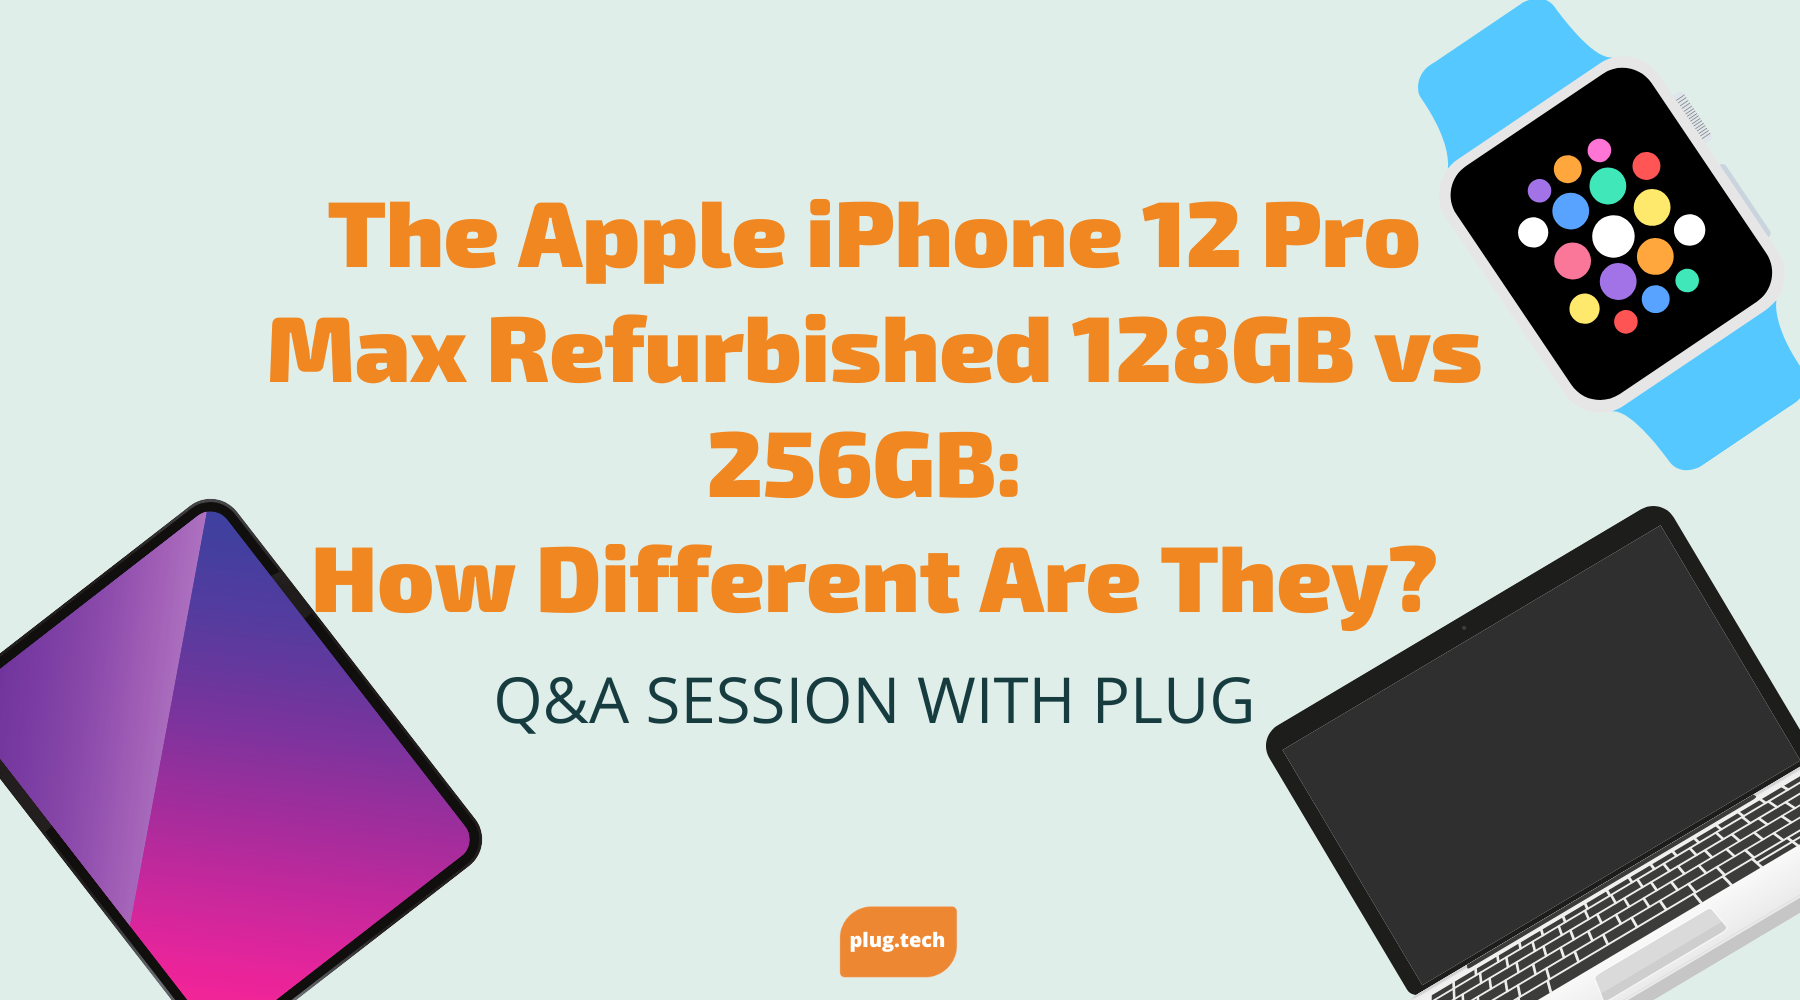 iPhone 12 Pro Max (256GB) vs iPhone 12 Pro Max (128GB)